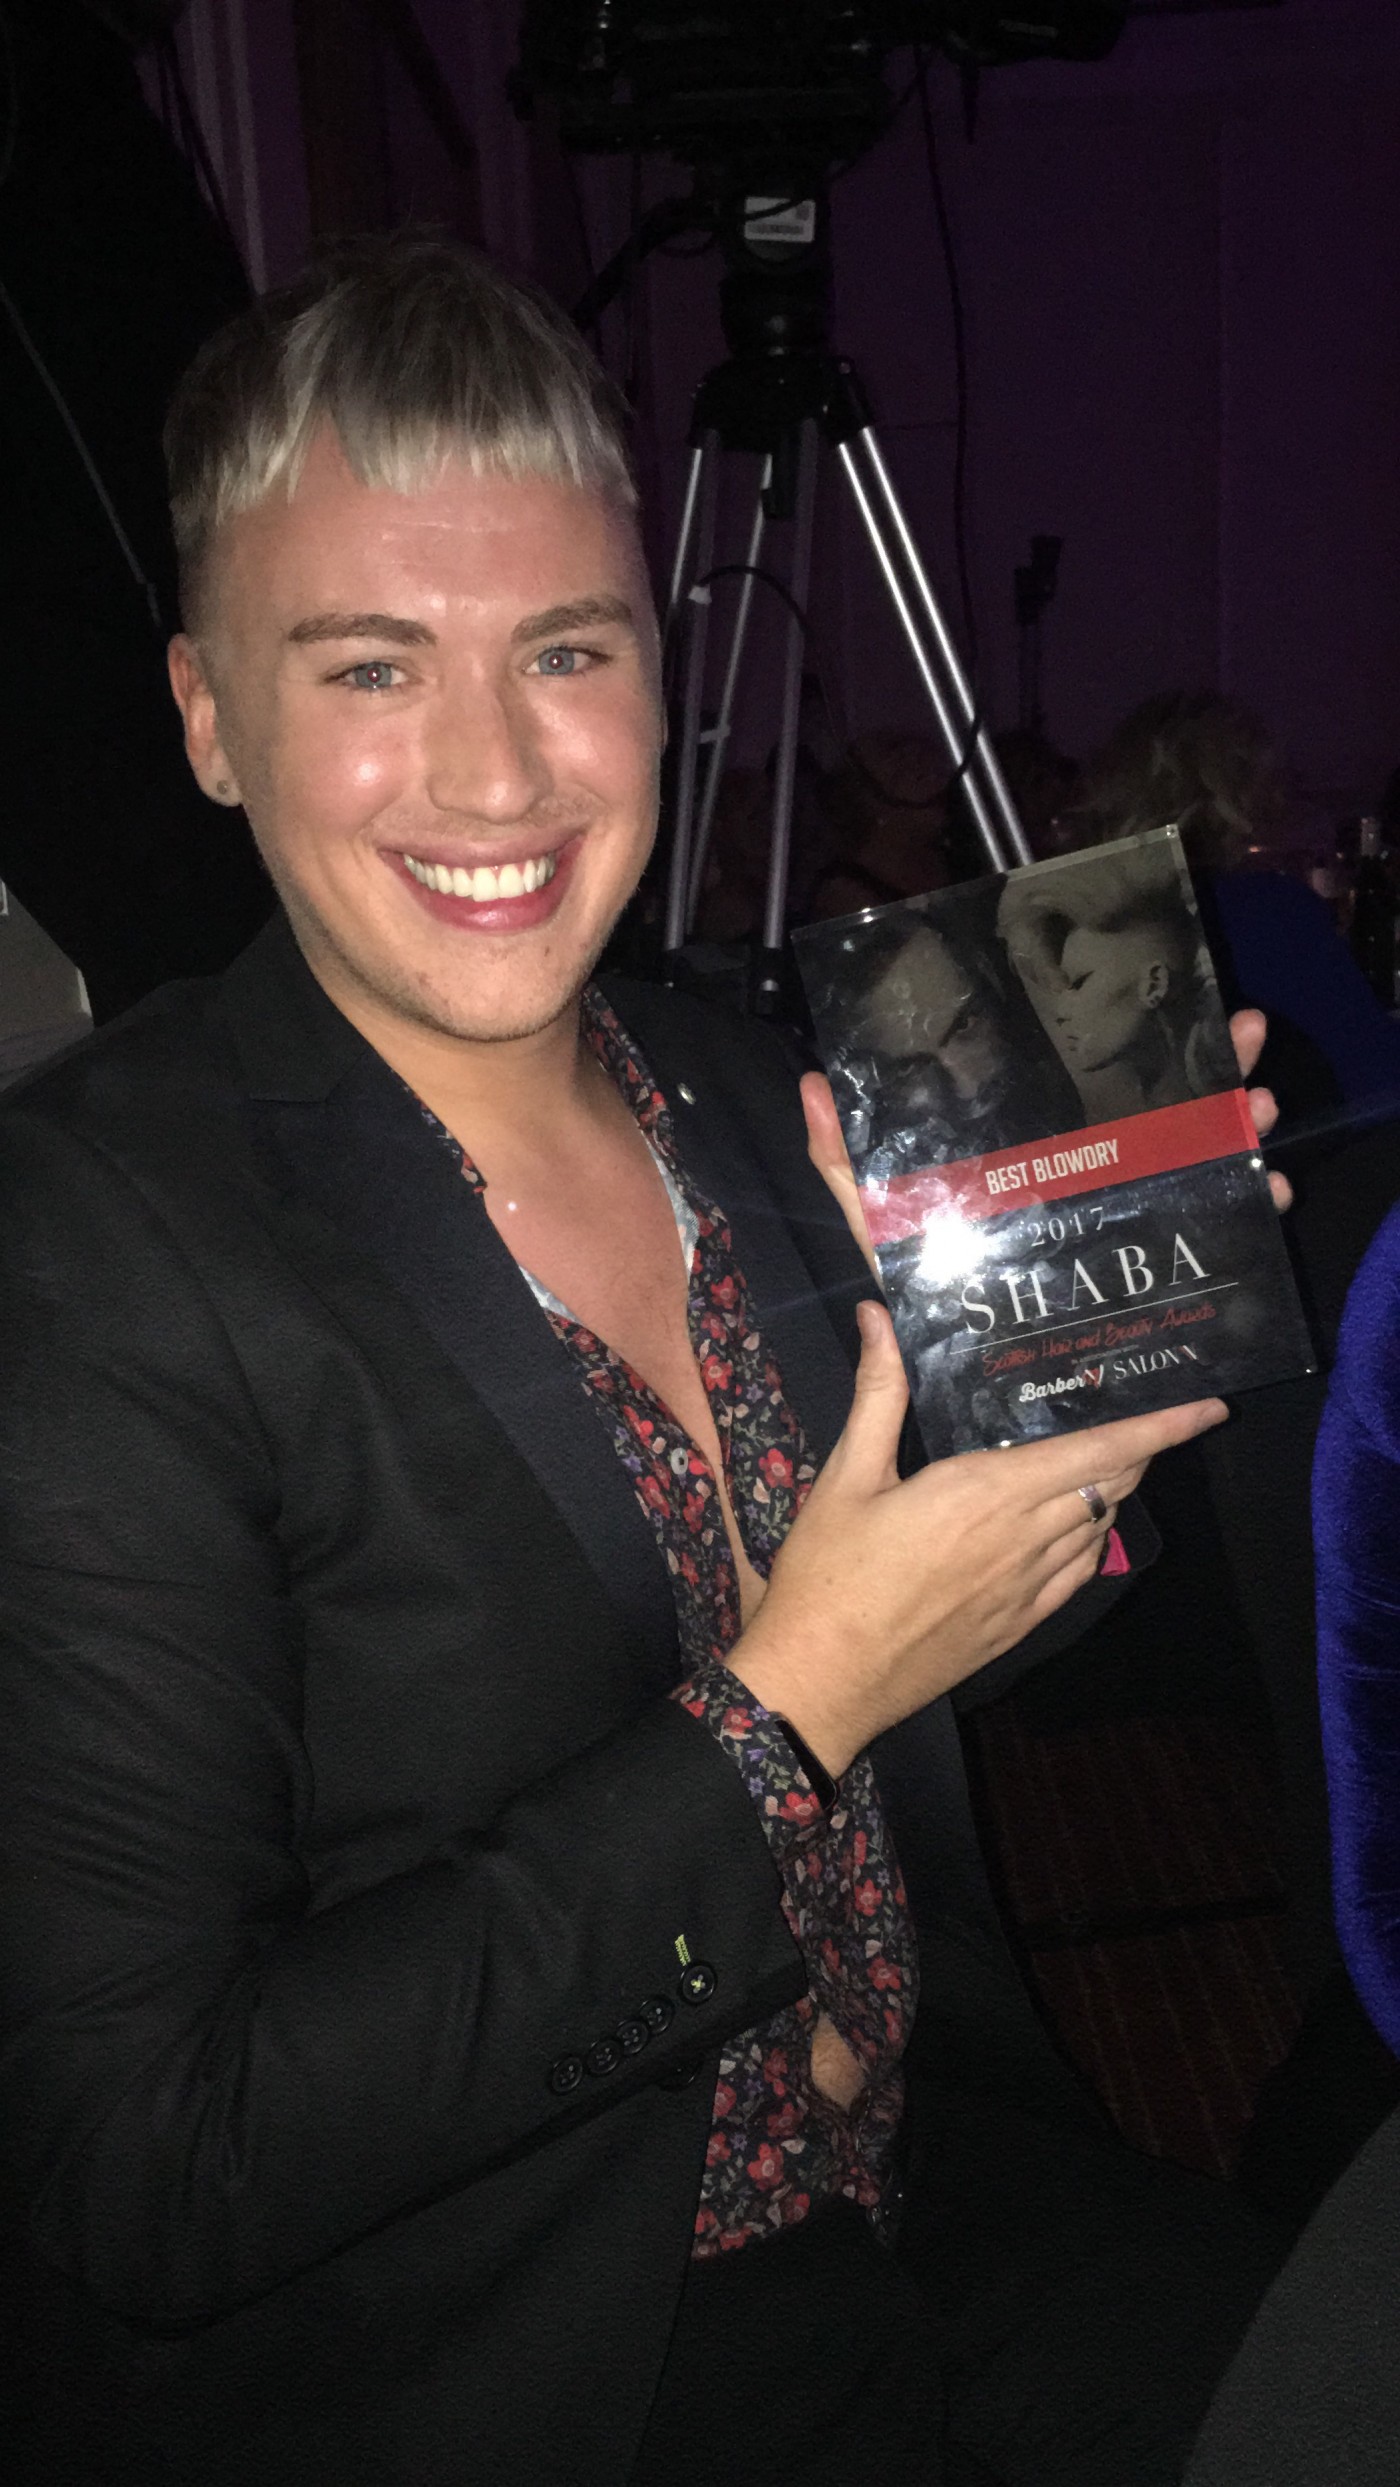 Craig SHABA Winner 2017